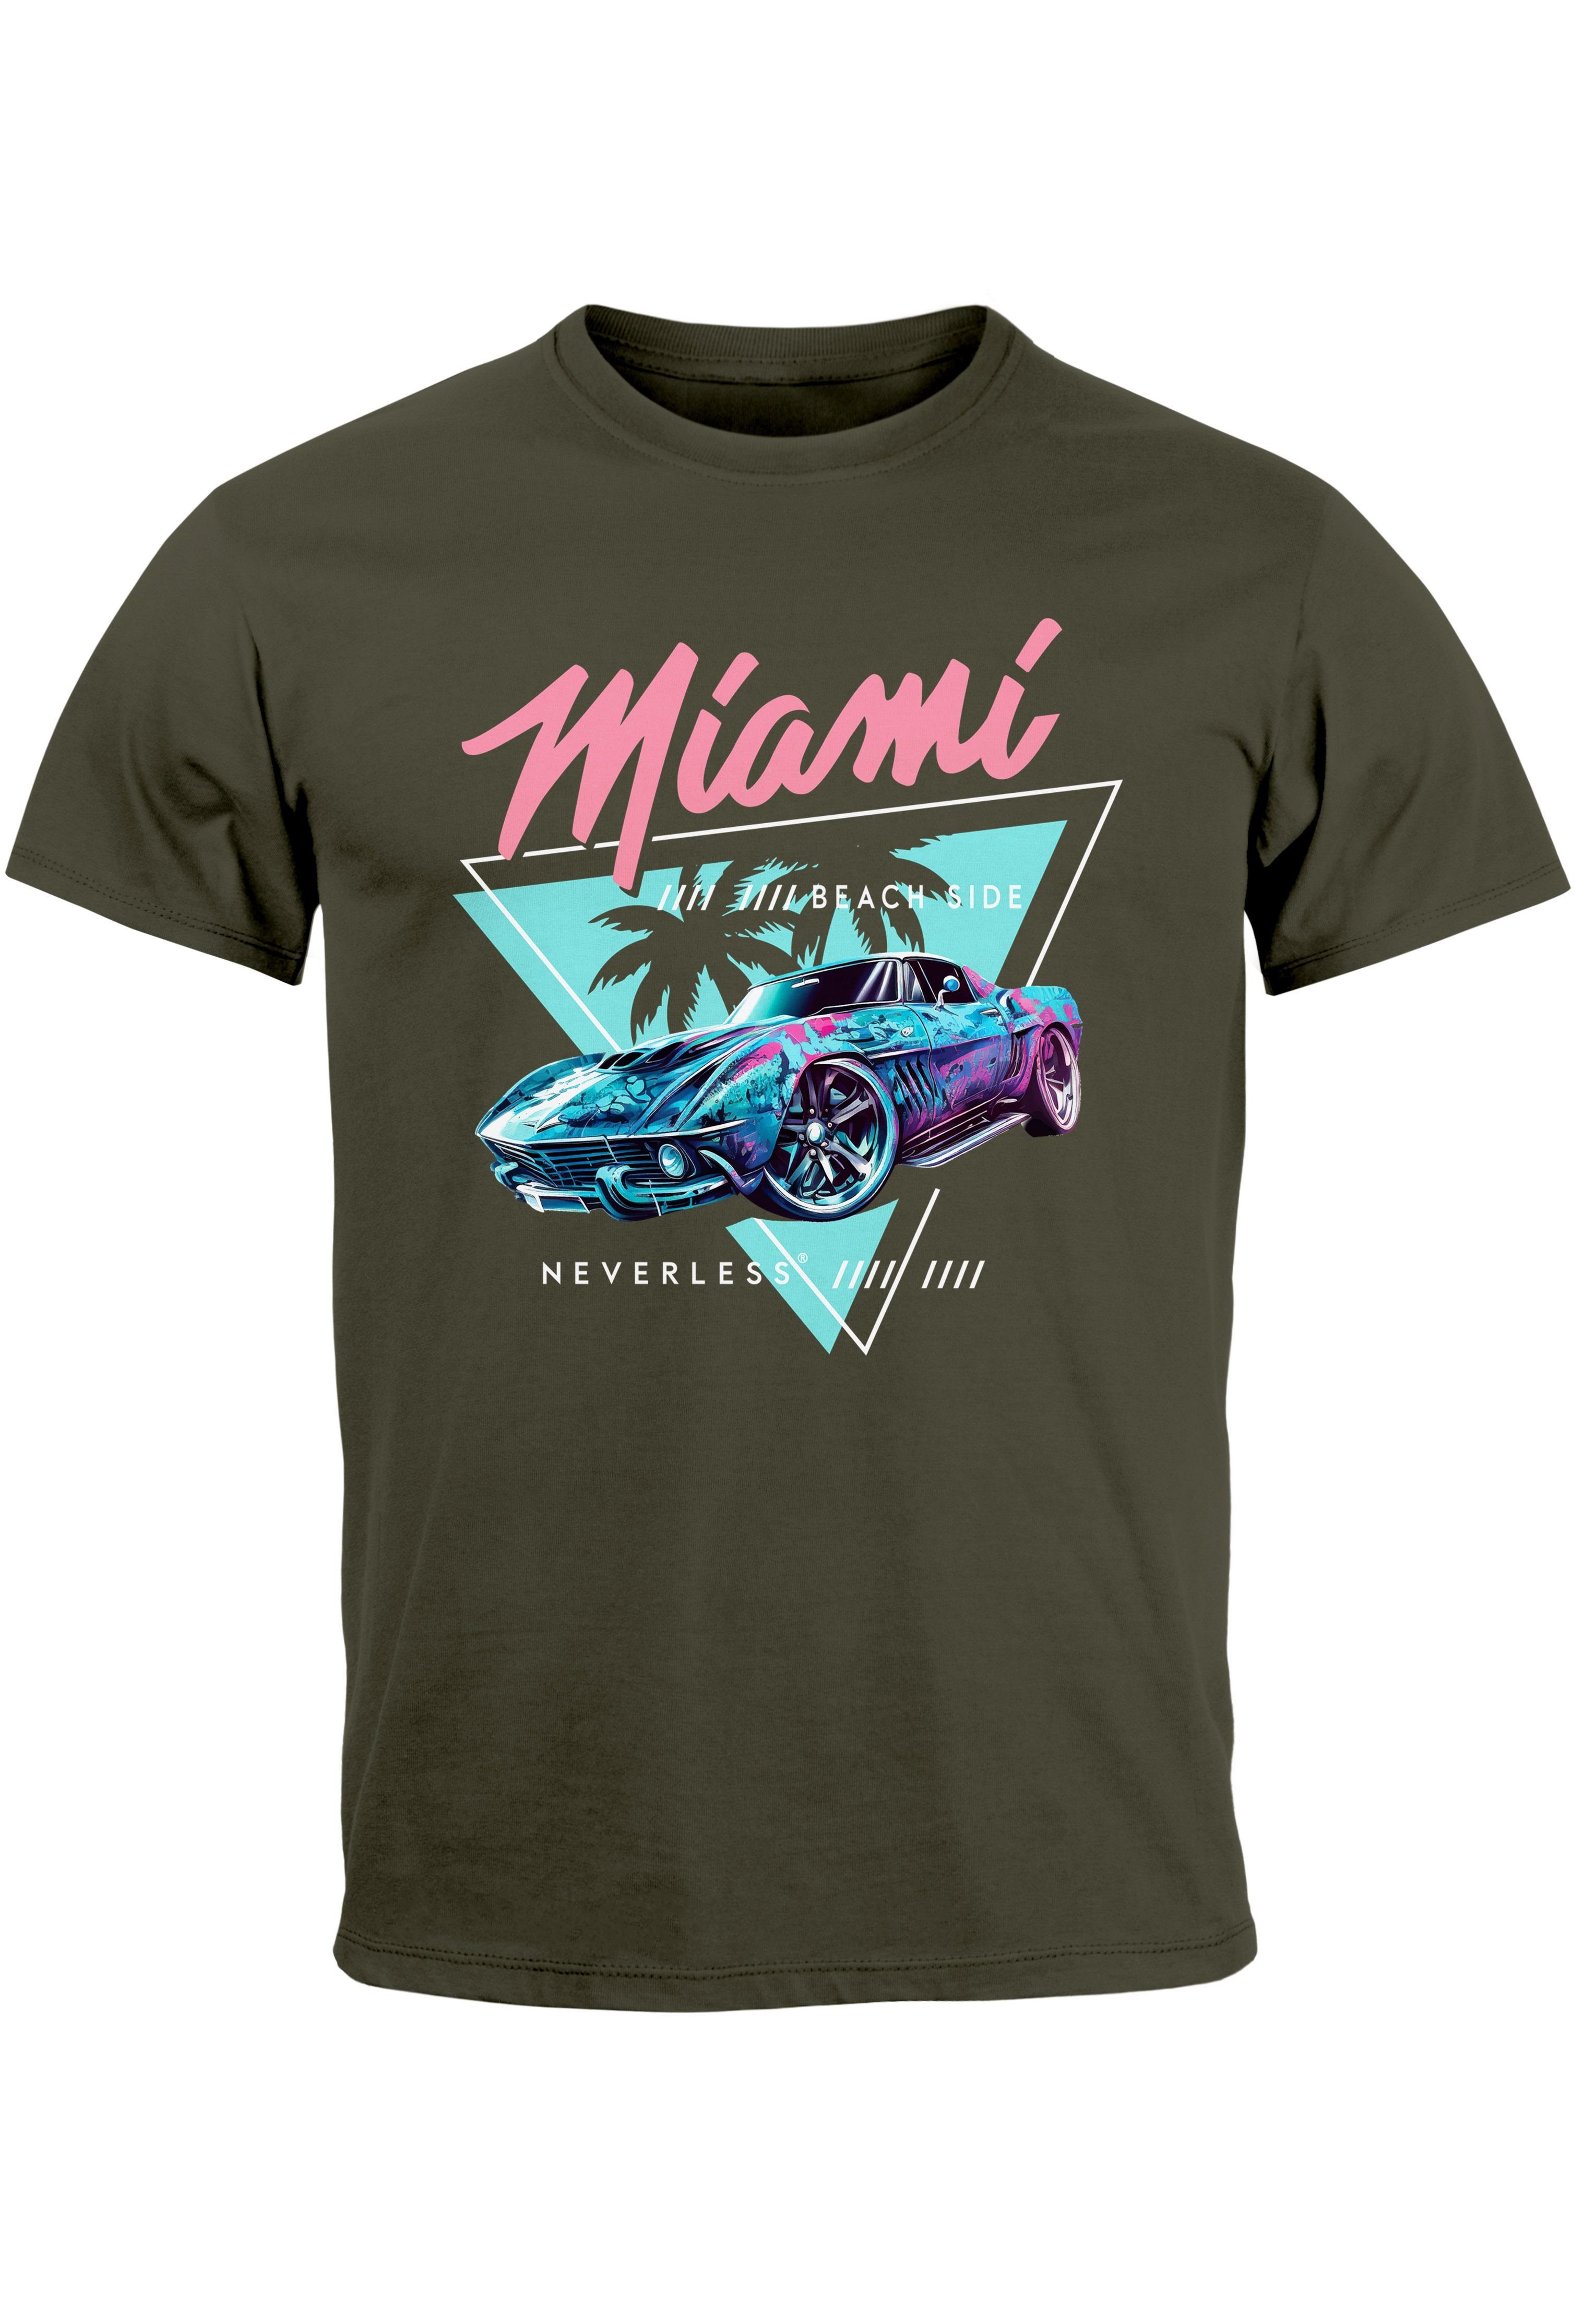 Neverless Print-Shirt Herren T-Shirt Bedruckt Miami Beach Surfing Motiv USA Retro Automobil mit Print army